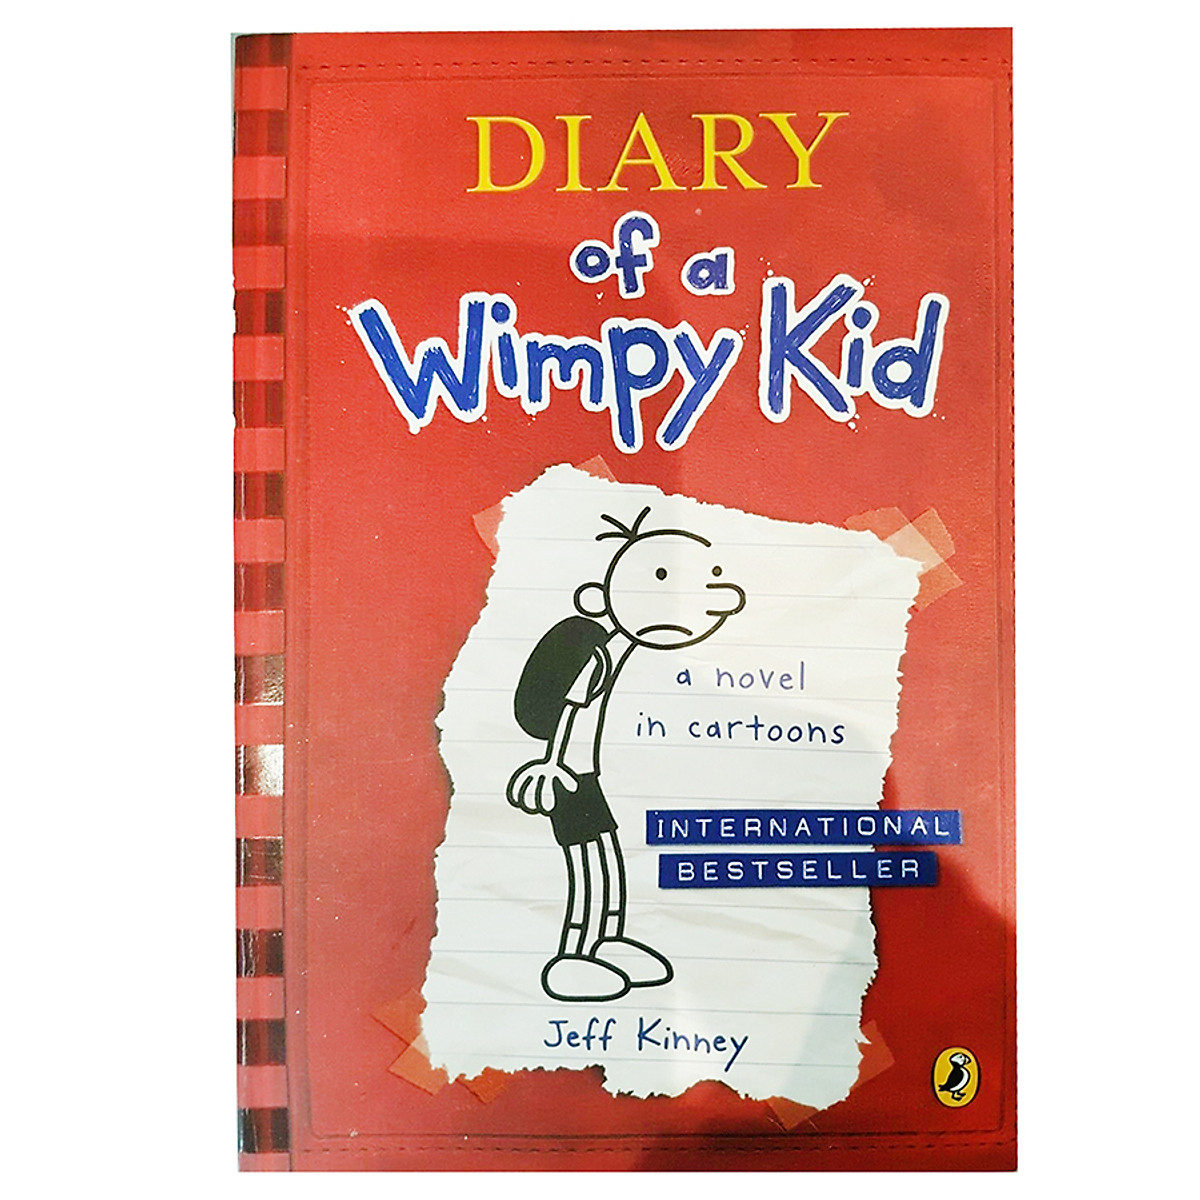 Truyện thiếu nhi tiếng Anh - Diary Of A Wimpy Kid 01: A Novel In Cartoons